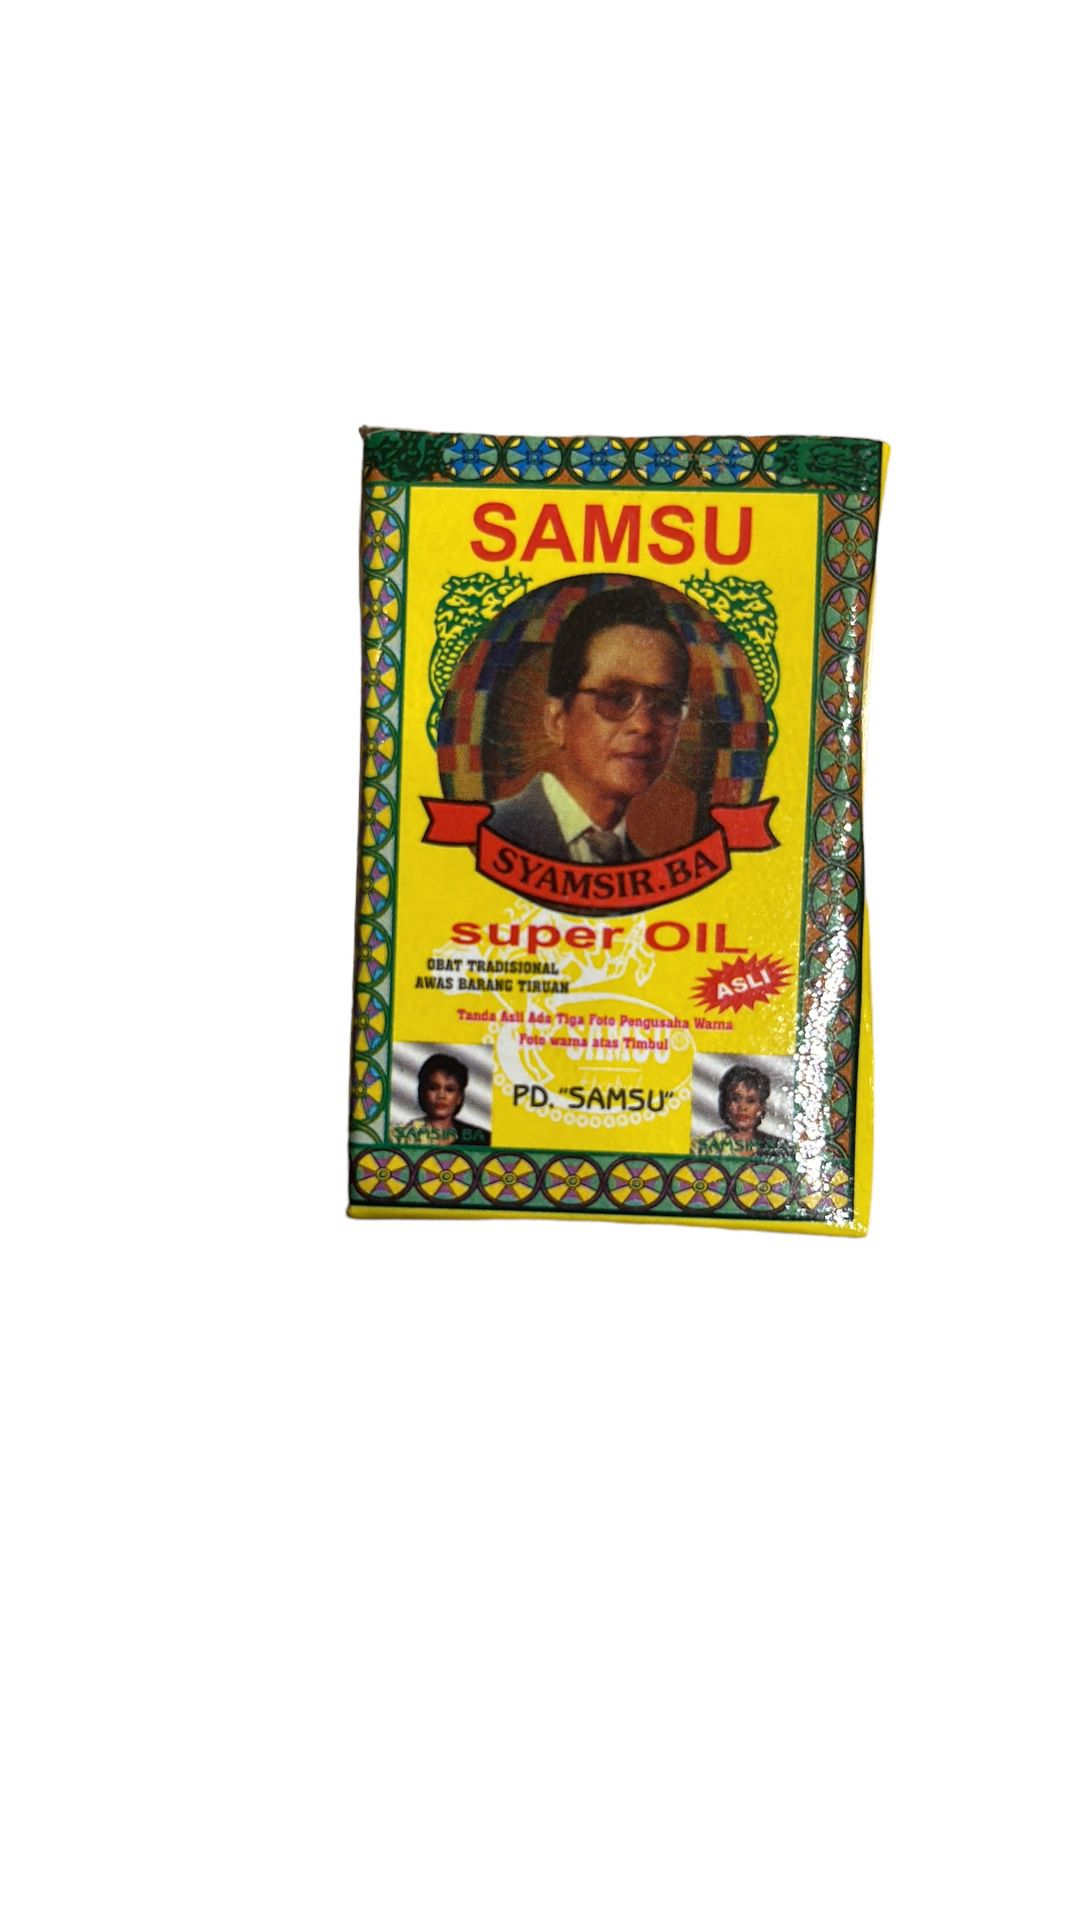 Samsu oil